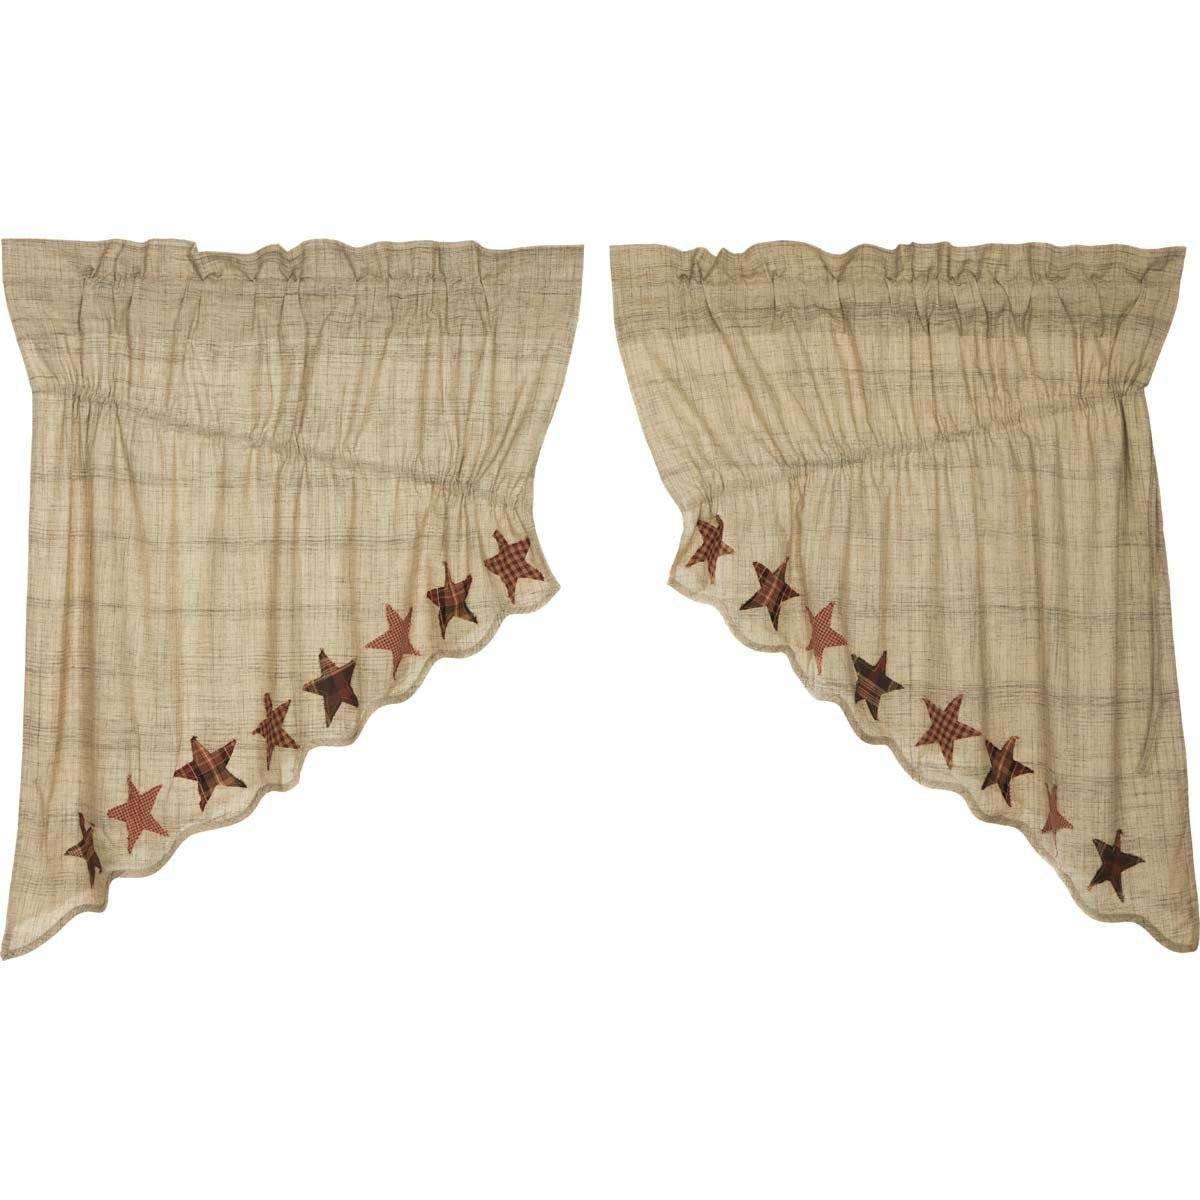 Abilene Star Prairie Swag Curtain Set of 2 36x36x18 VHC Brands online